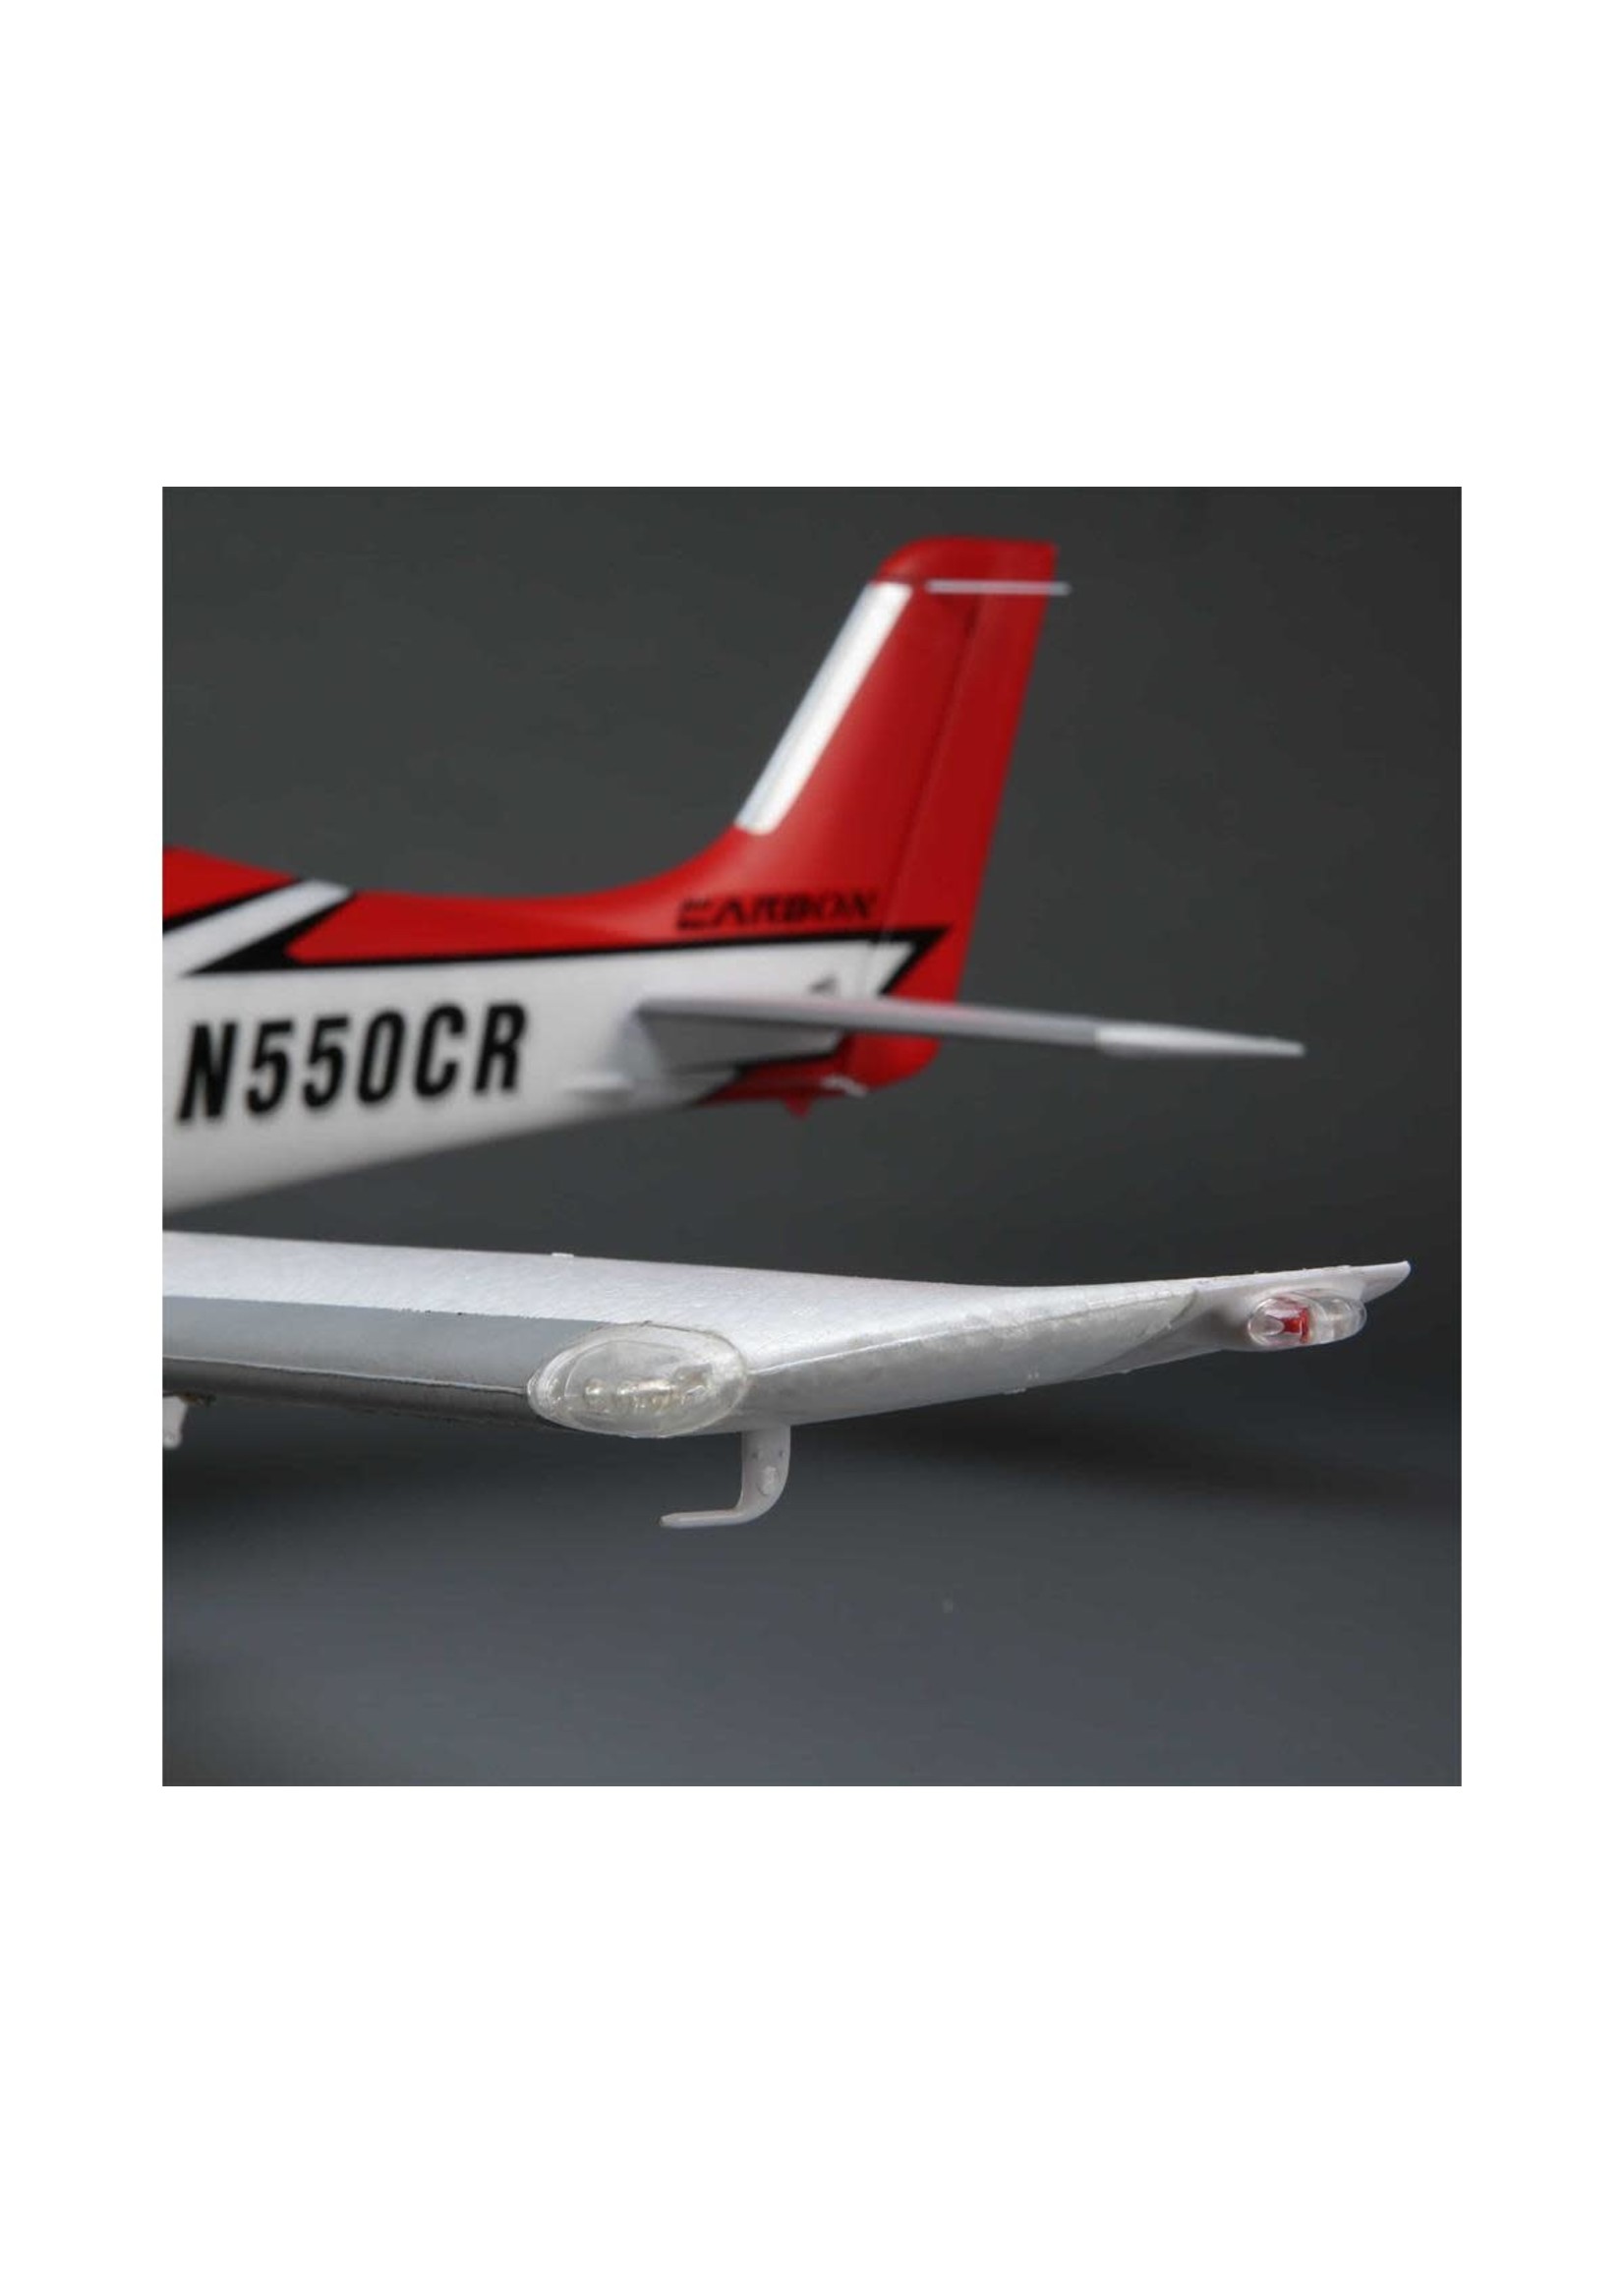 E-Flite EFL15950 E-flite Cirrus SR22T 1.5m Bind-N-Fly Basic Electric Airplane (1499mm) w/Smart ESC, AS3X & SAFE